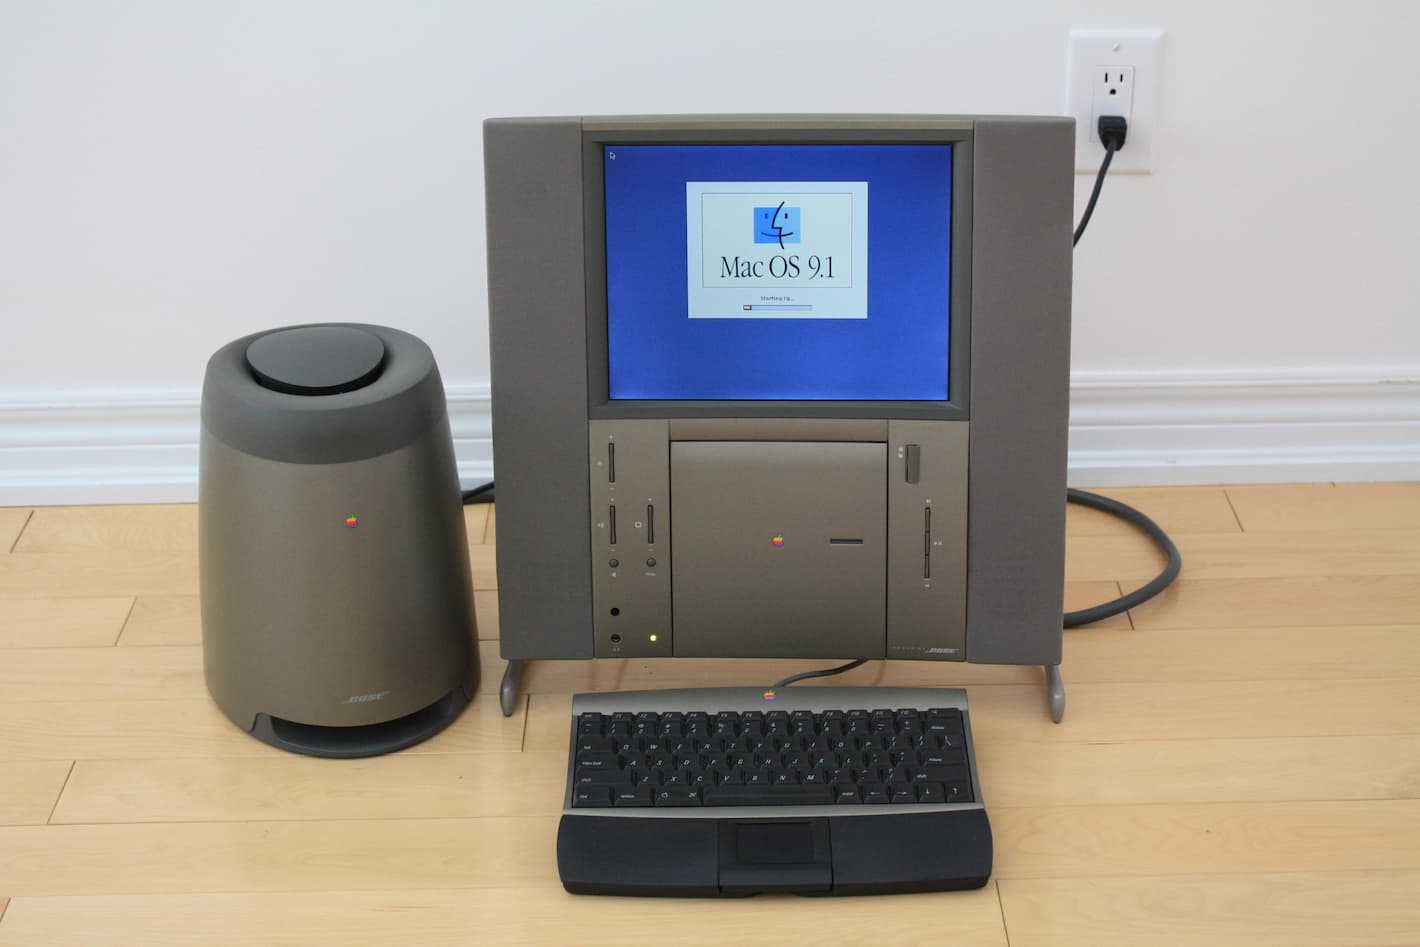 A Twentieth Anniversary Macintosh